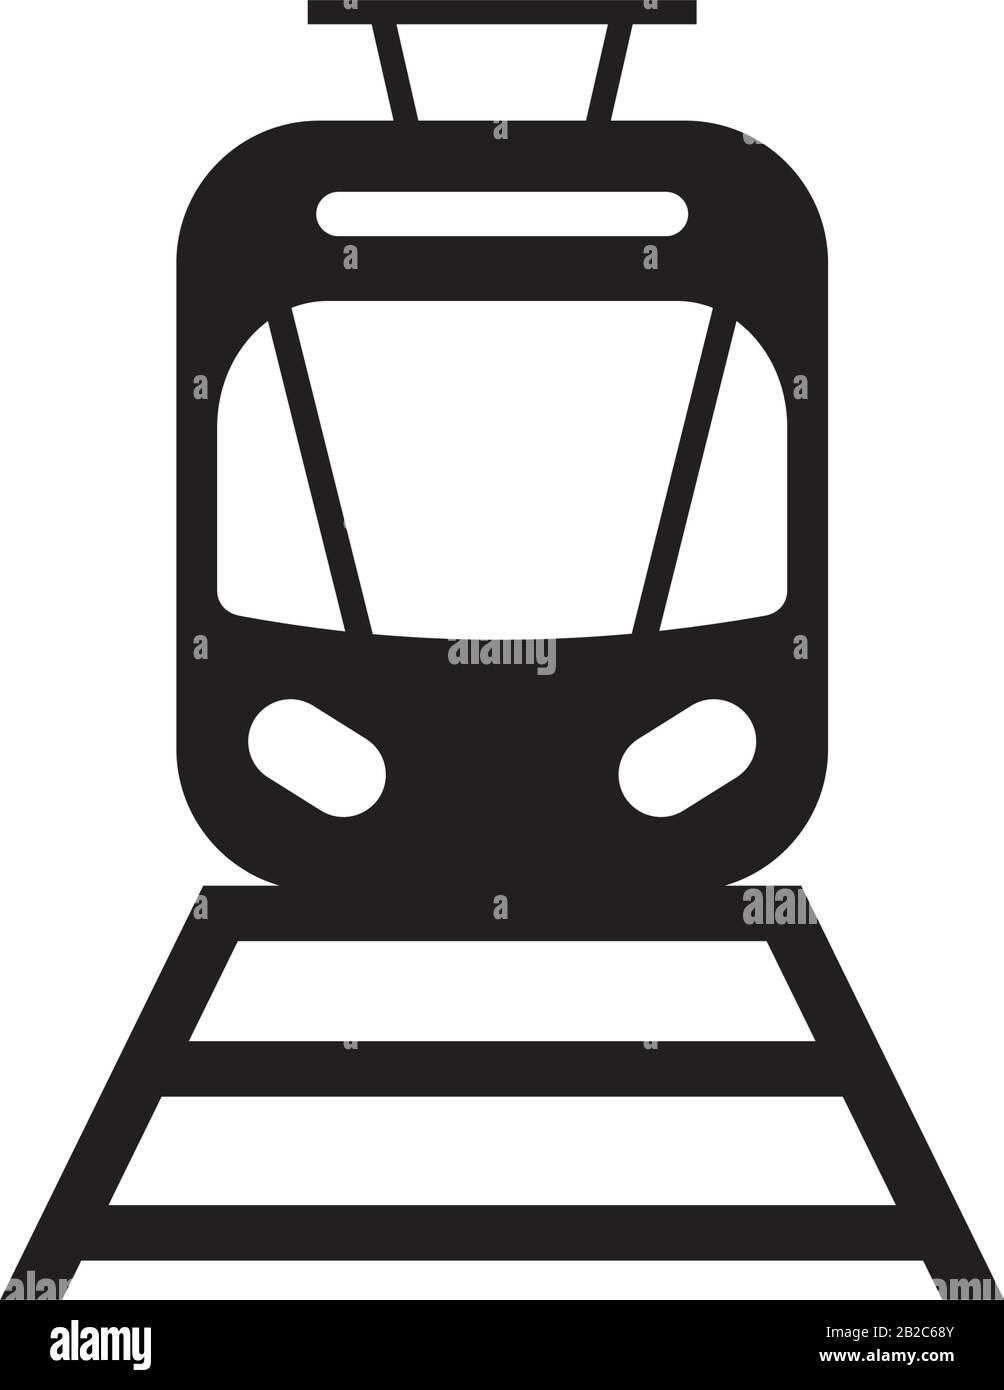 Train icon template black color editable. Train icon symbol Flat vector illustration for graphic and web design. Stock Vector